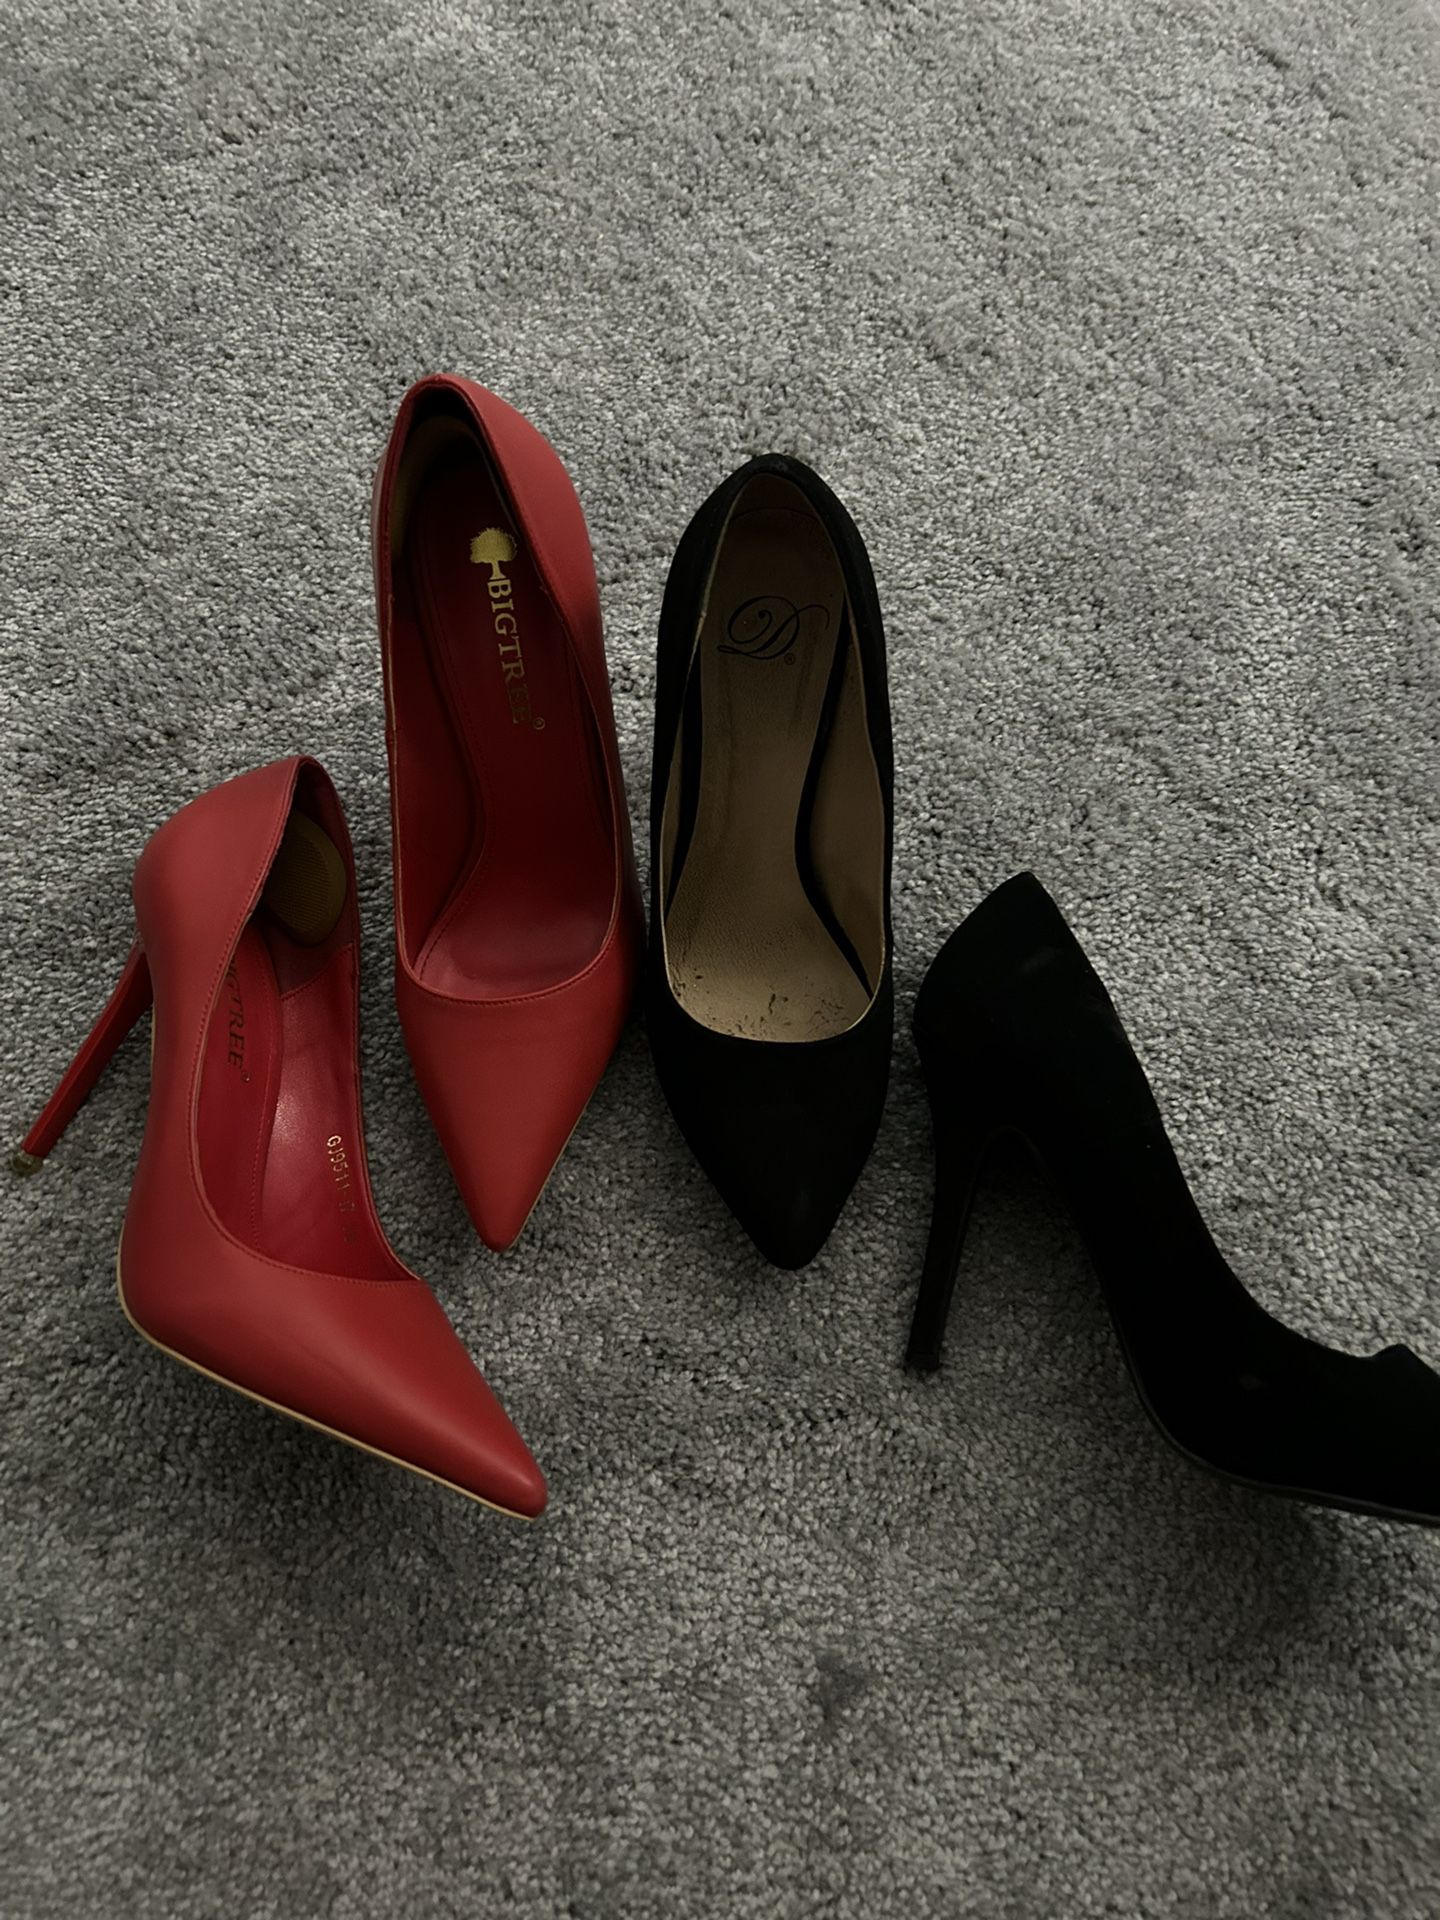 Women High Heels Red One 7.5 Black 7 $5 Both 